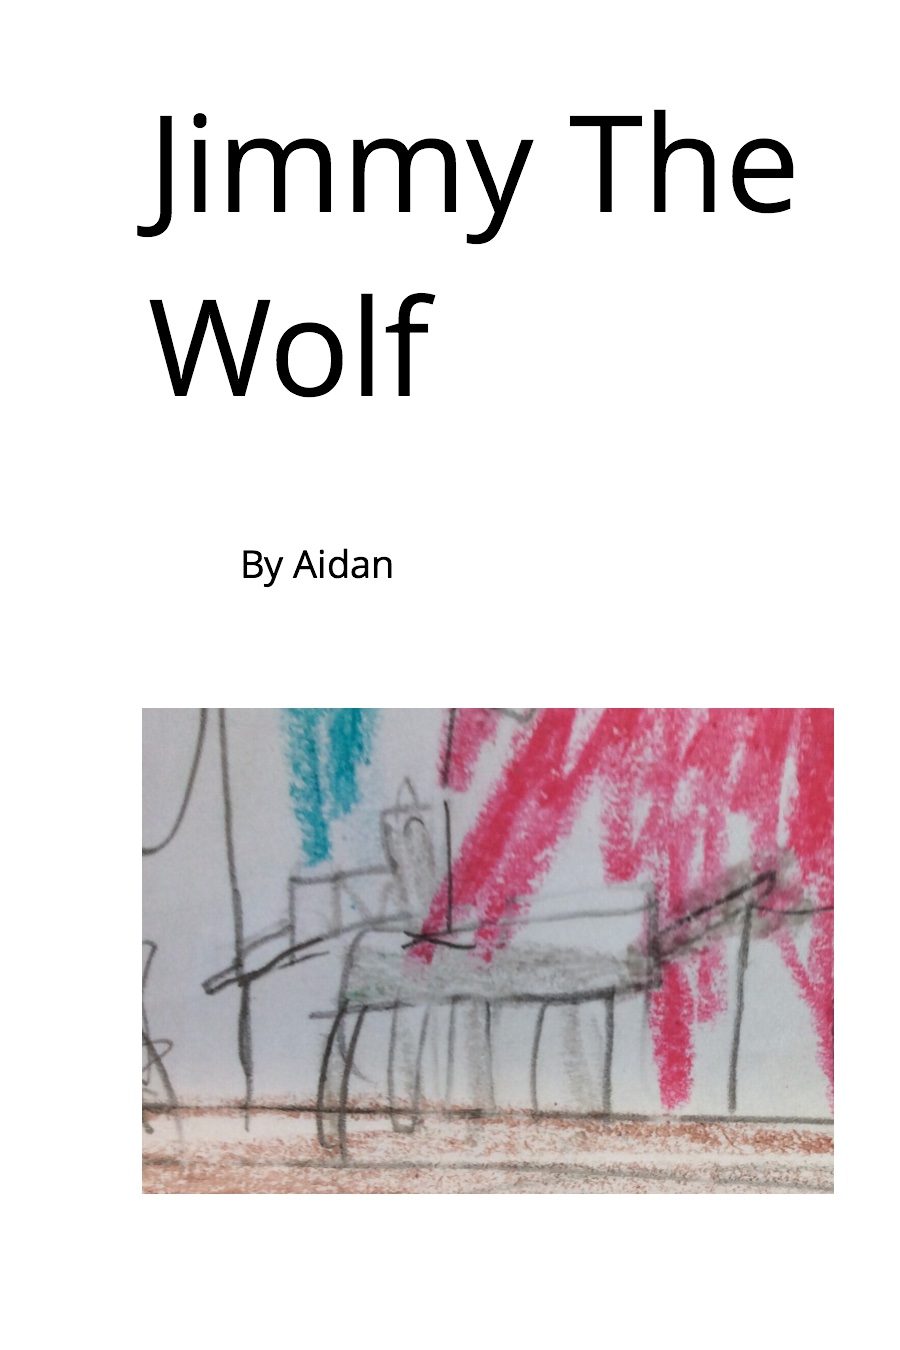 Jimmy the Wolf by Aidan K